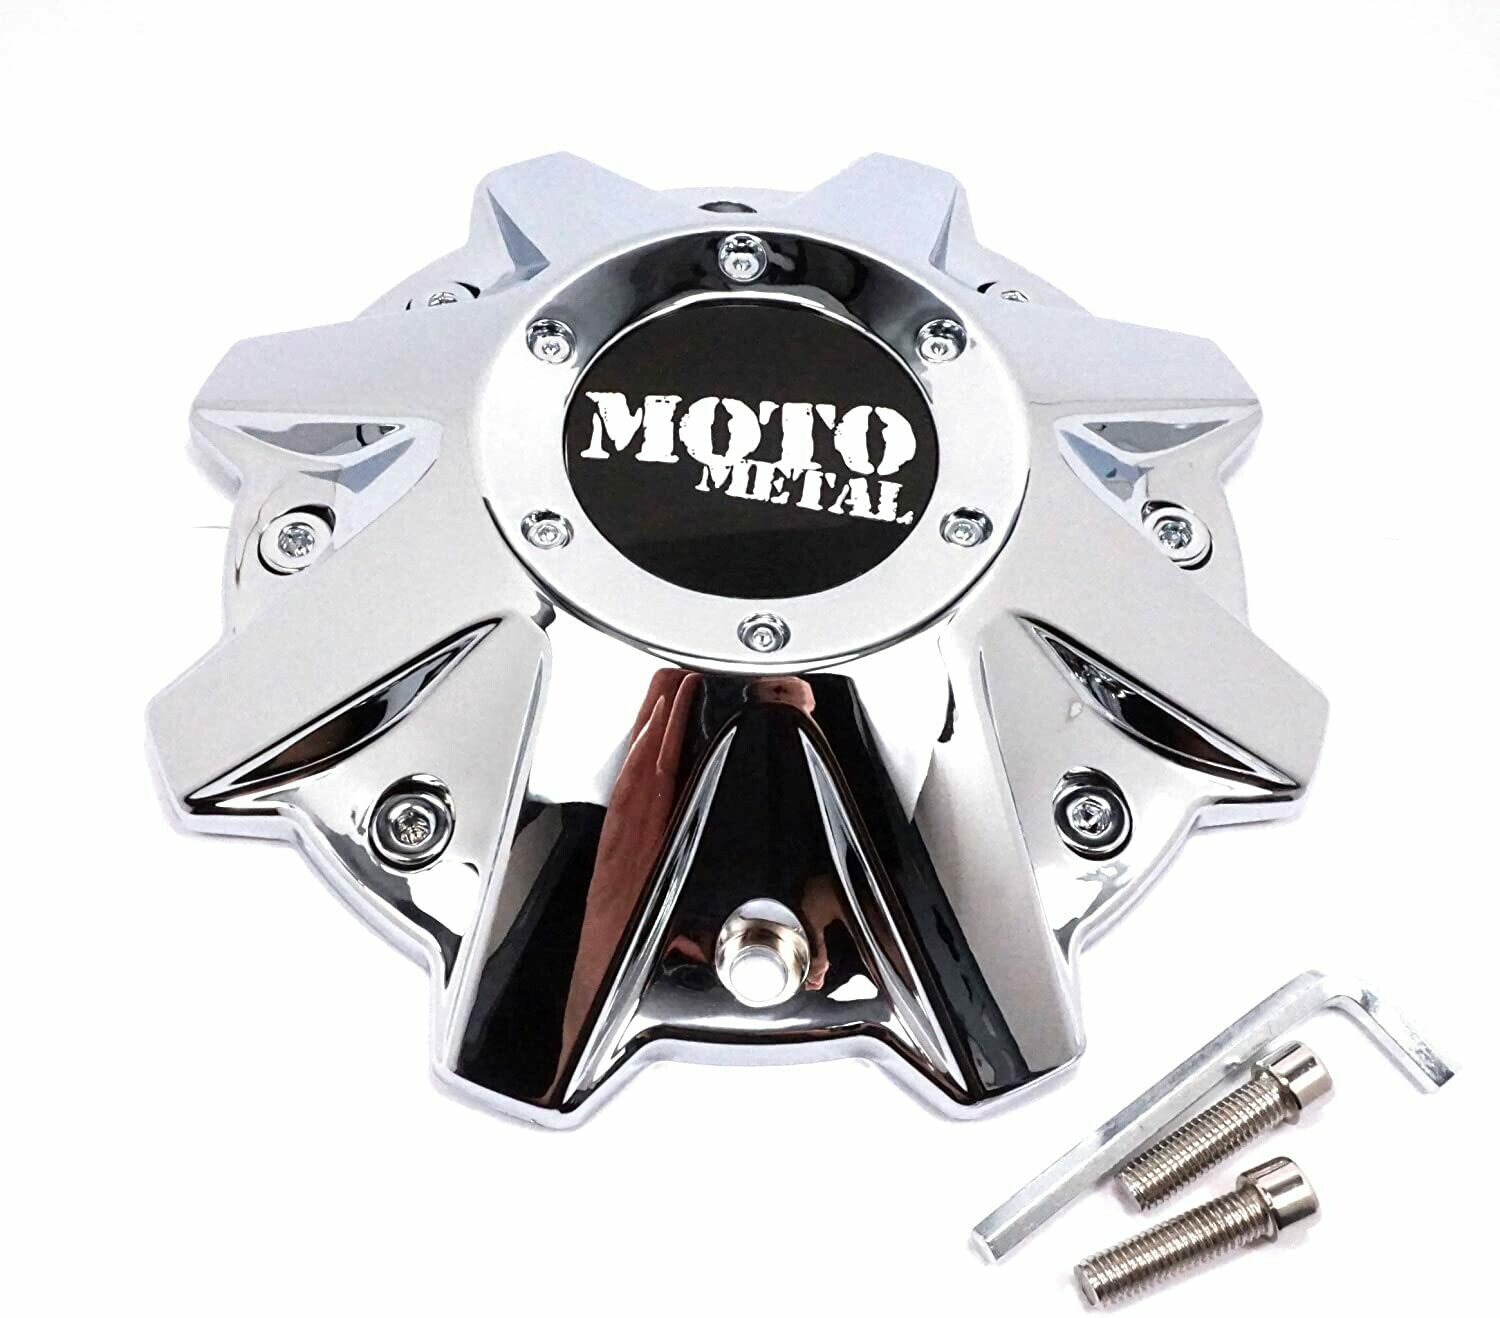 Moto Metal Mo479L214Ch Center Cap
Brand: Moto Metal